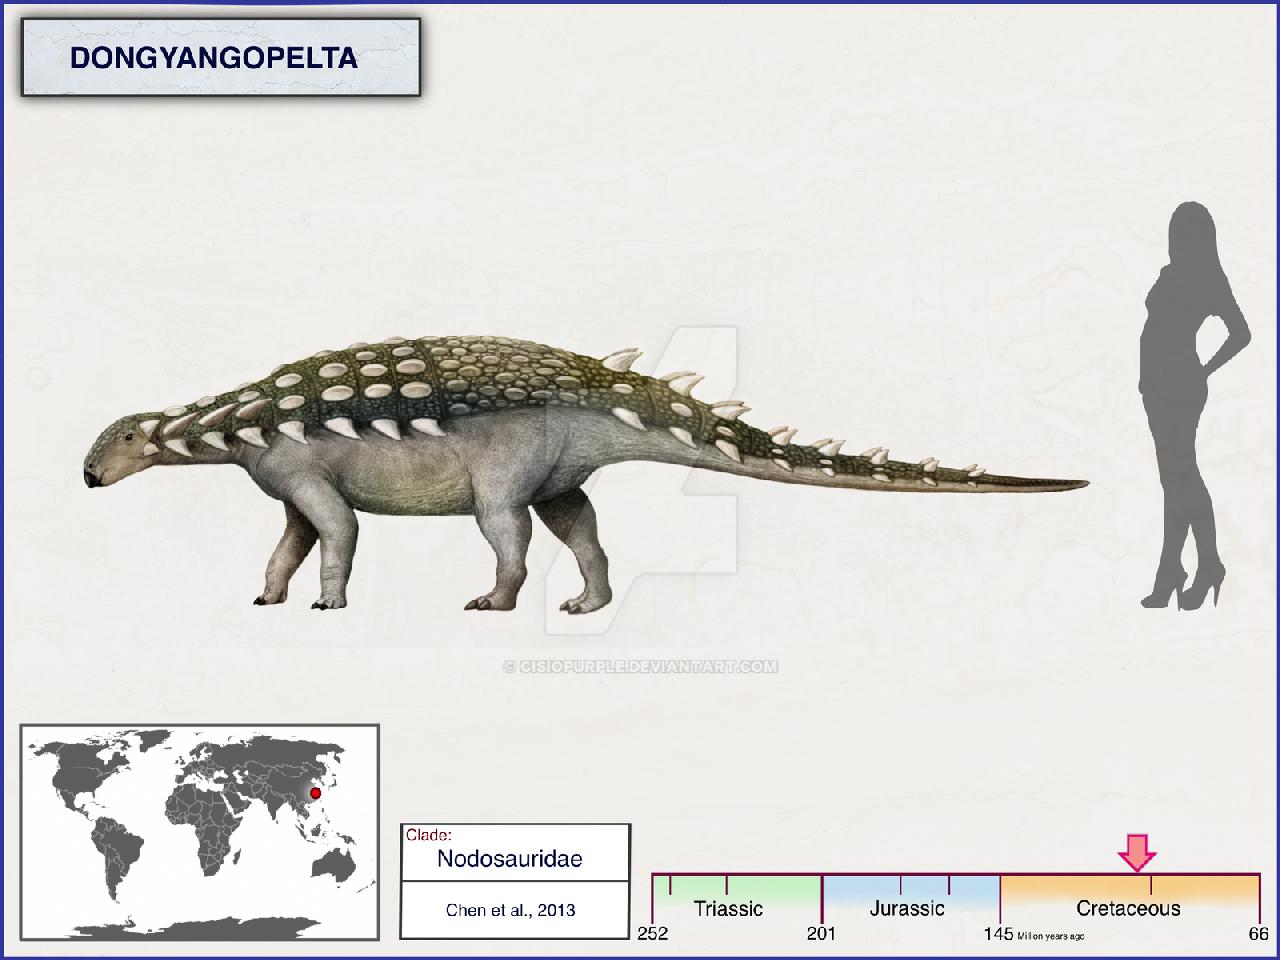 Dongyangopelta, Cretaceous
(Меловой период)